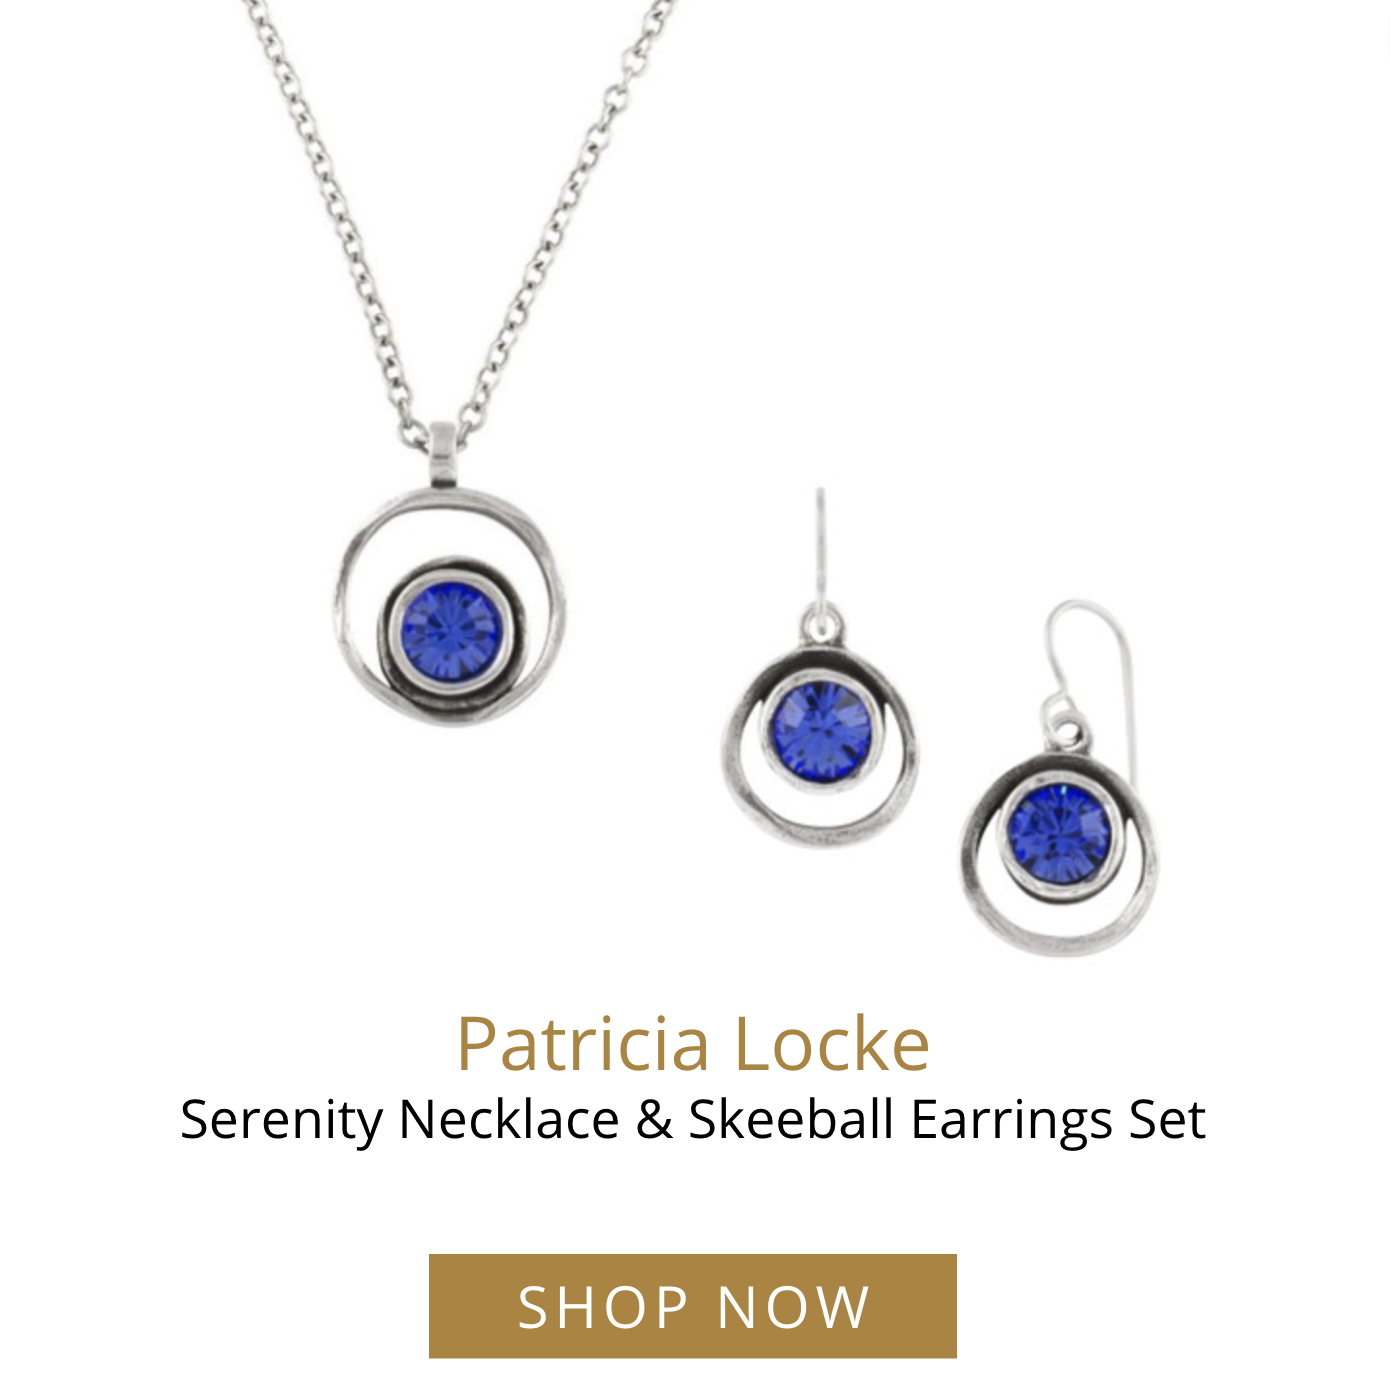 Patricia Locke Serenity Necklace and Skeeball Earrings